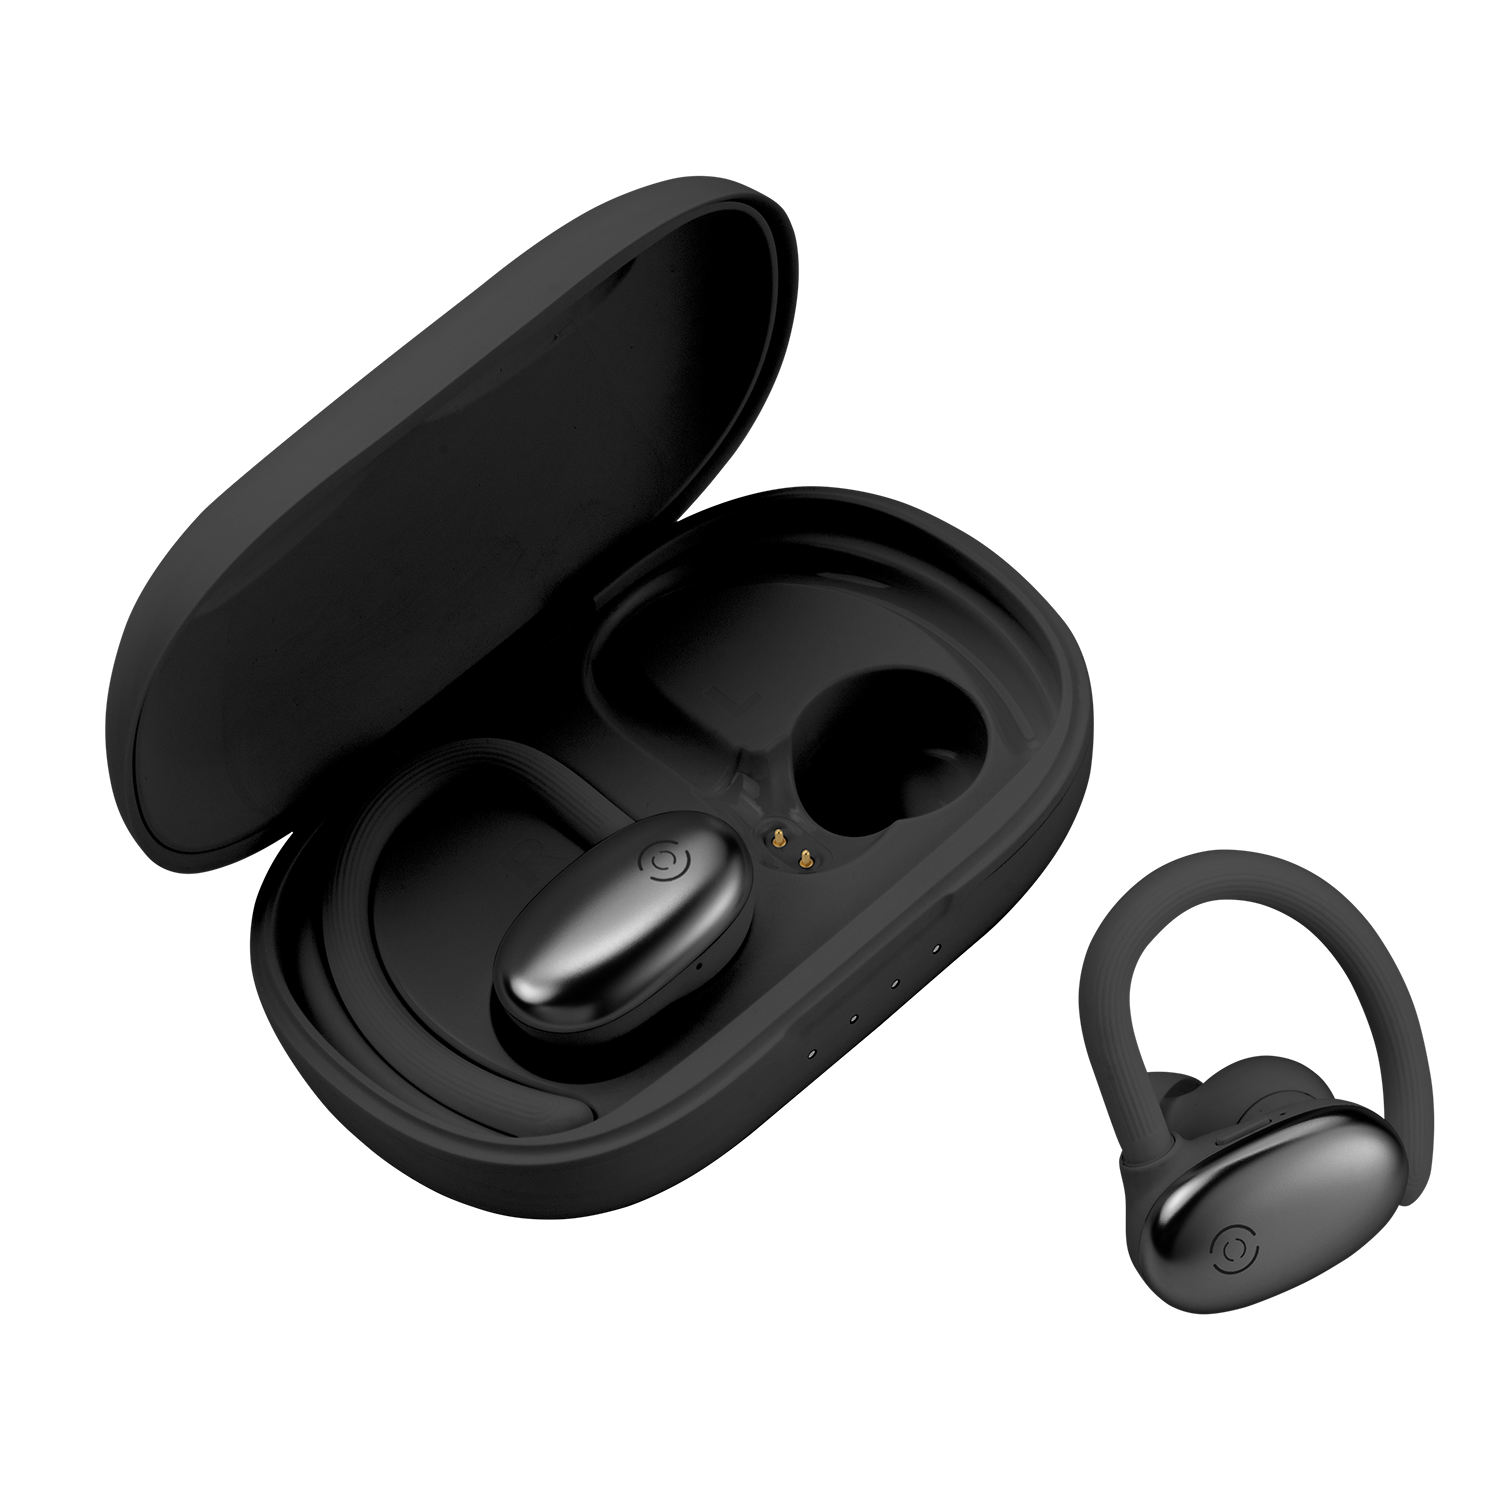 Joyfit True Wireless Bluetooth Earbuds Charging Case